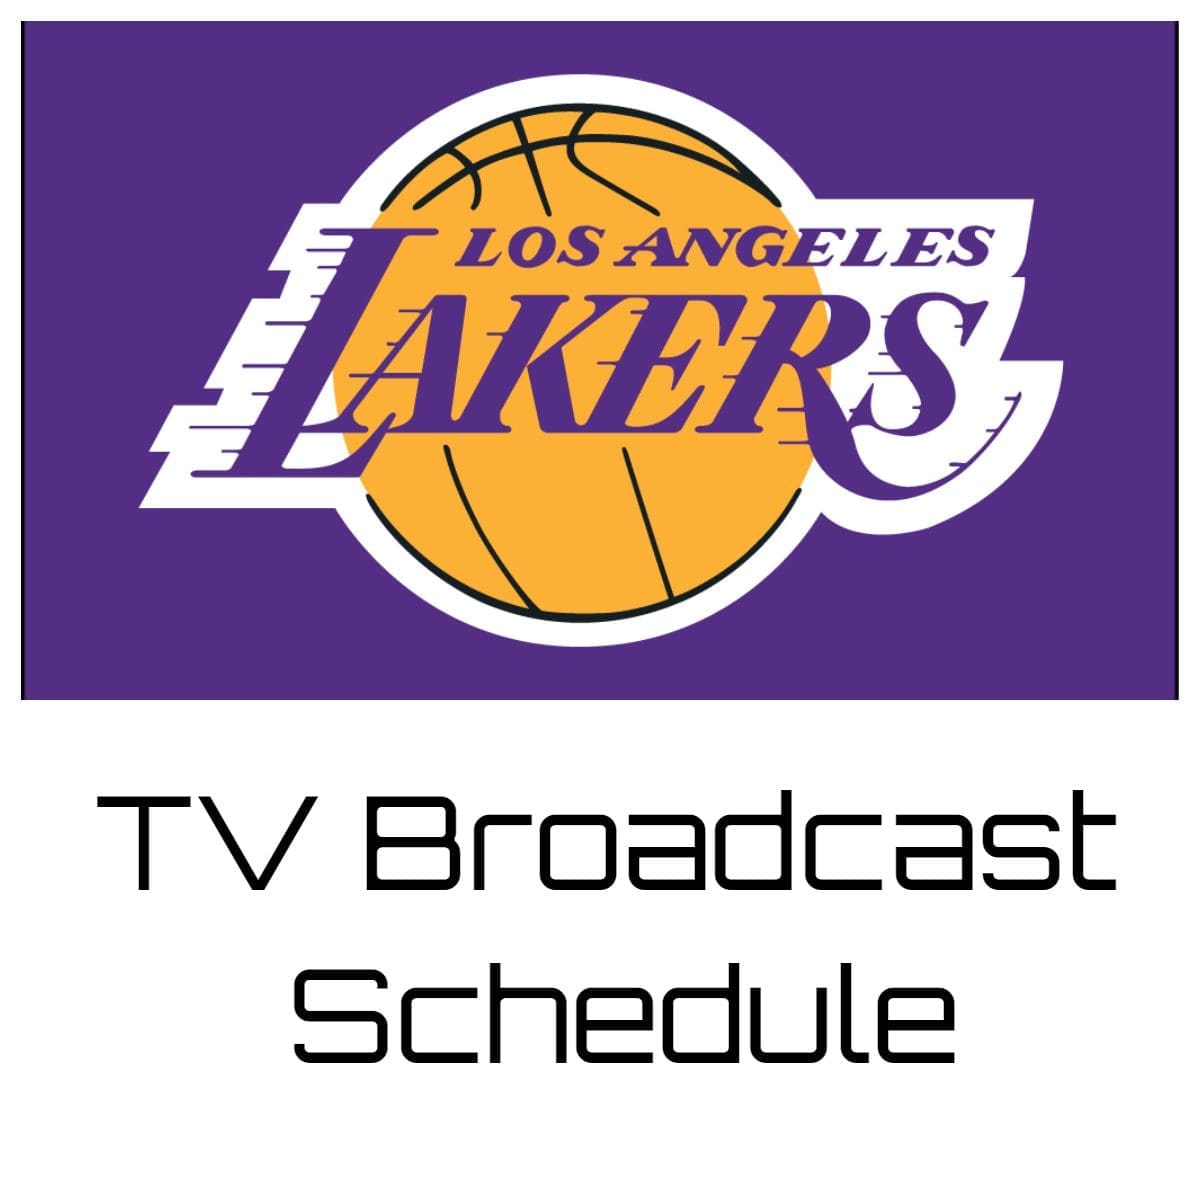 Los Angeles Lakers TV Broadcast Schedule